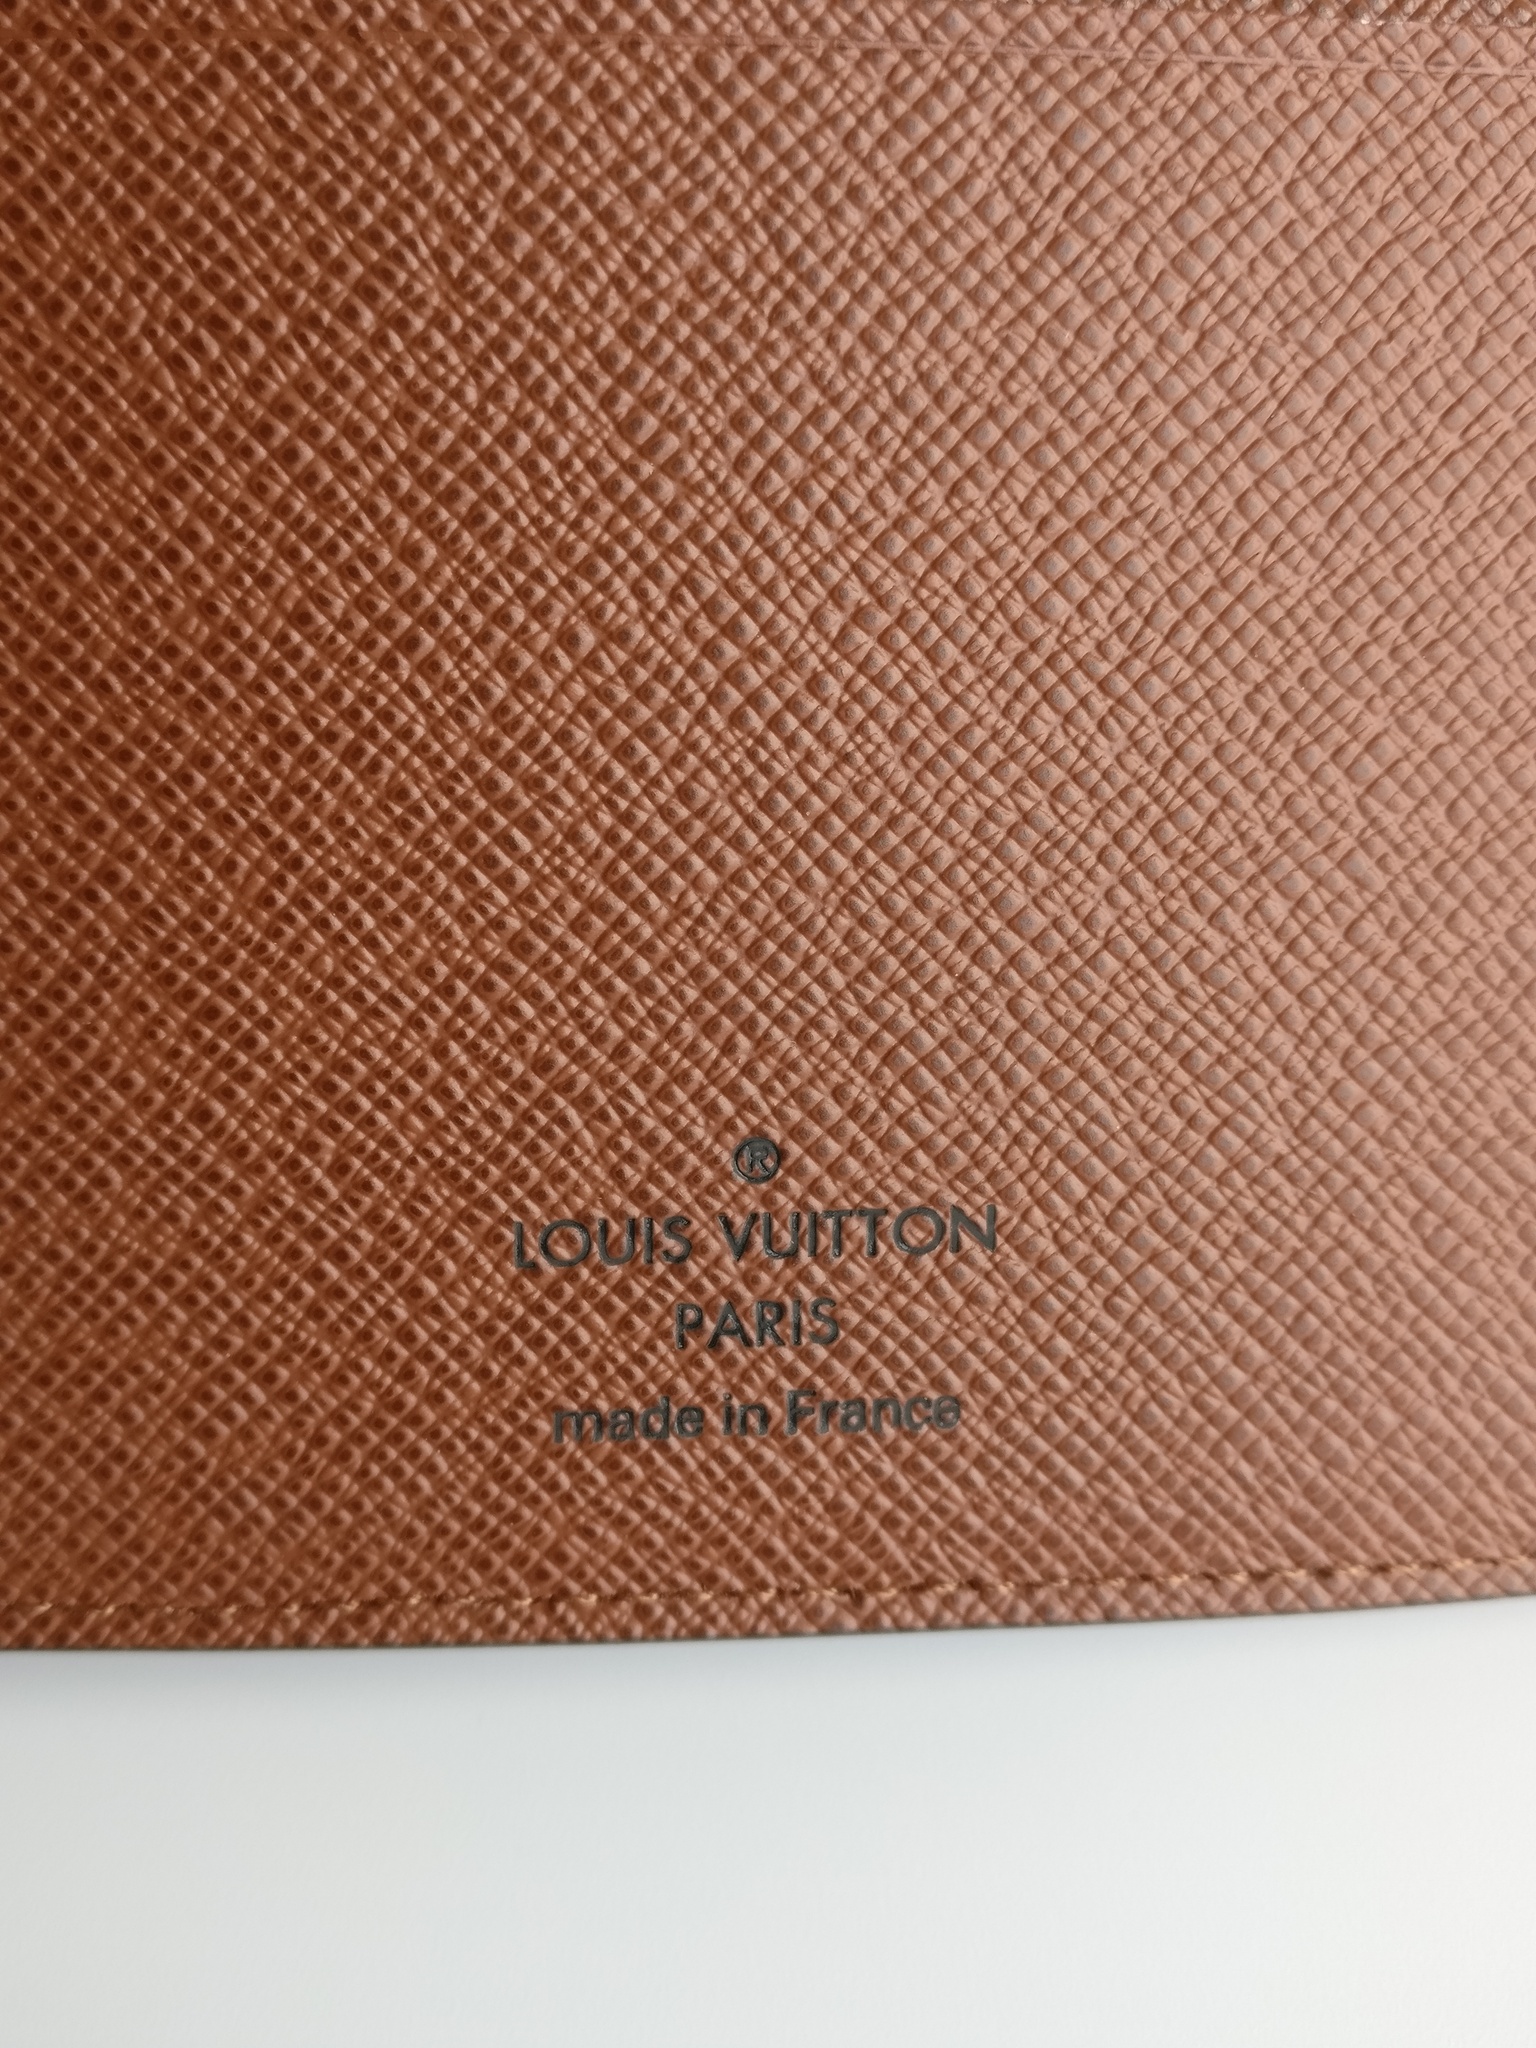 Louis Vuitton Desk Agenda cover